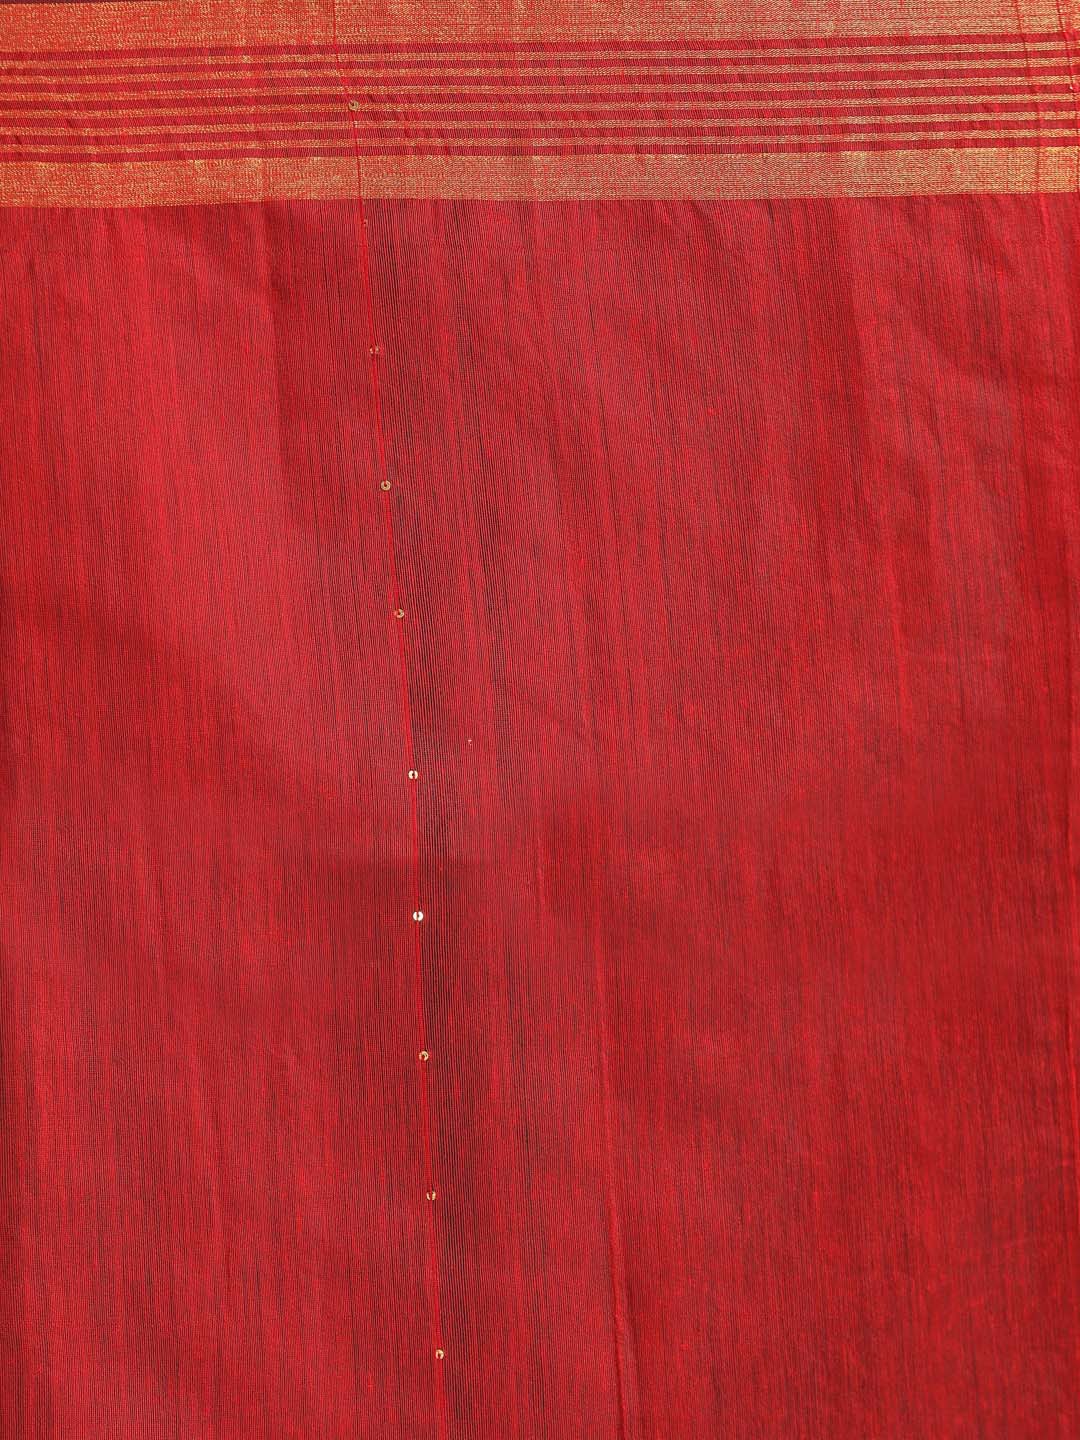 Indethnic Red Bengal Handloom Cotton Blend Work Saree - Saree Detail View